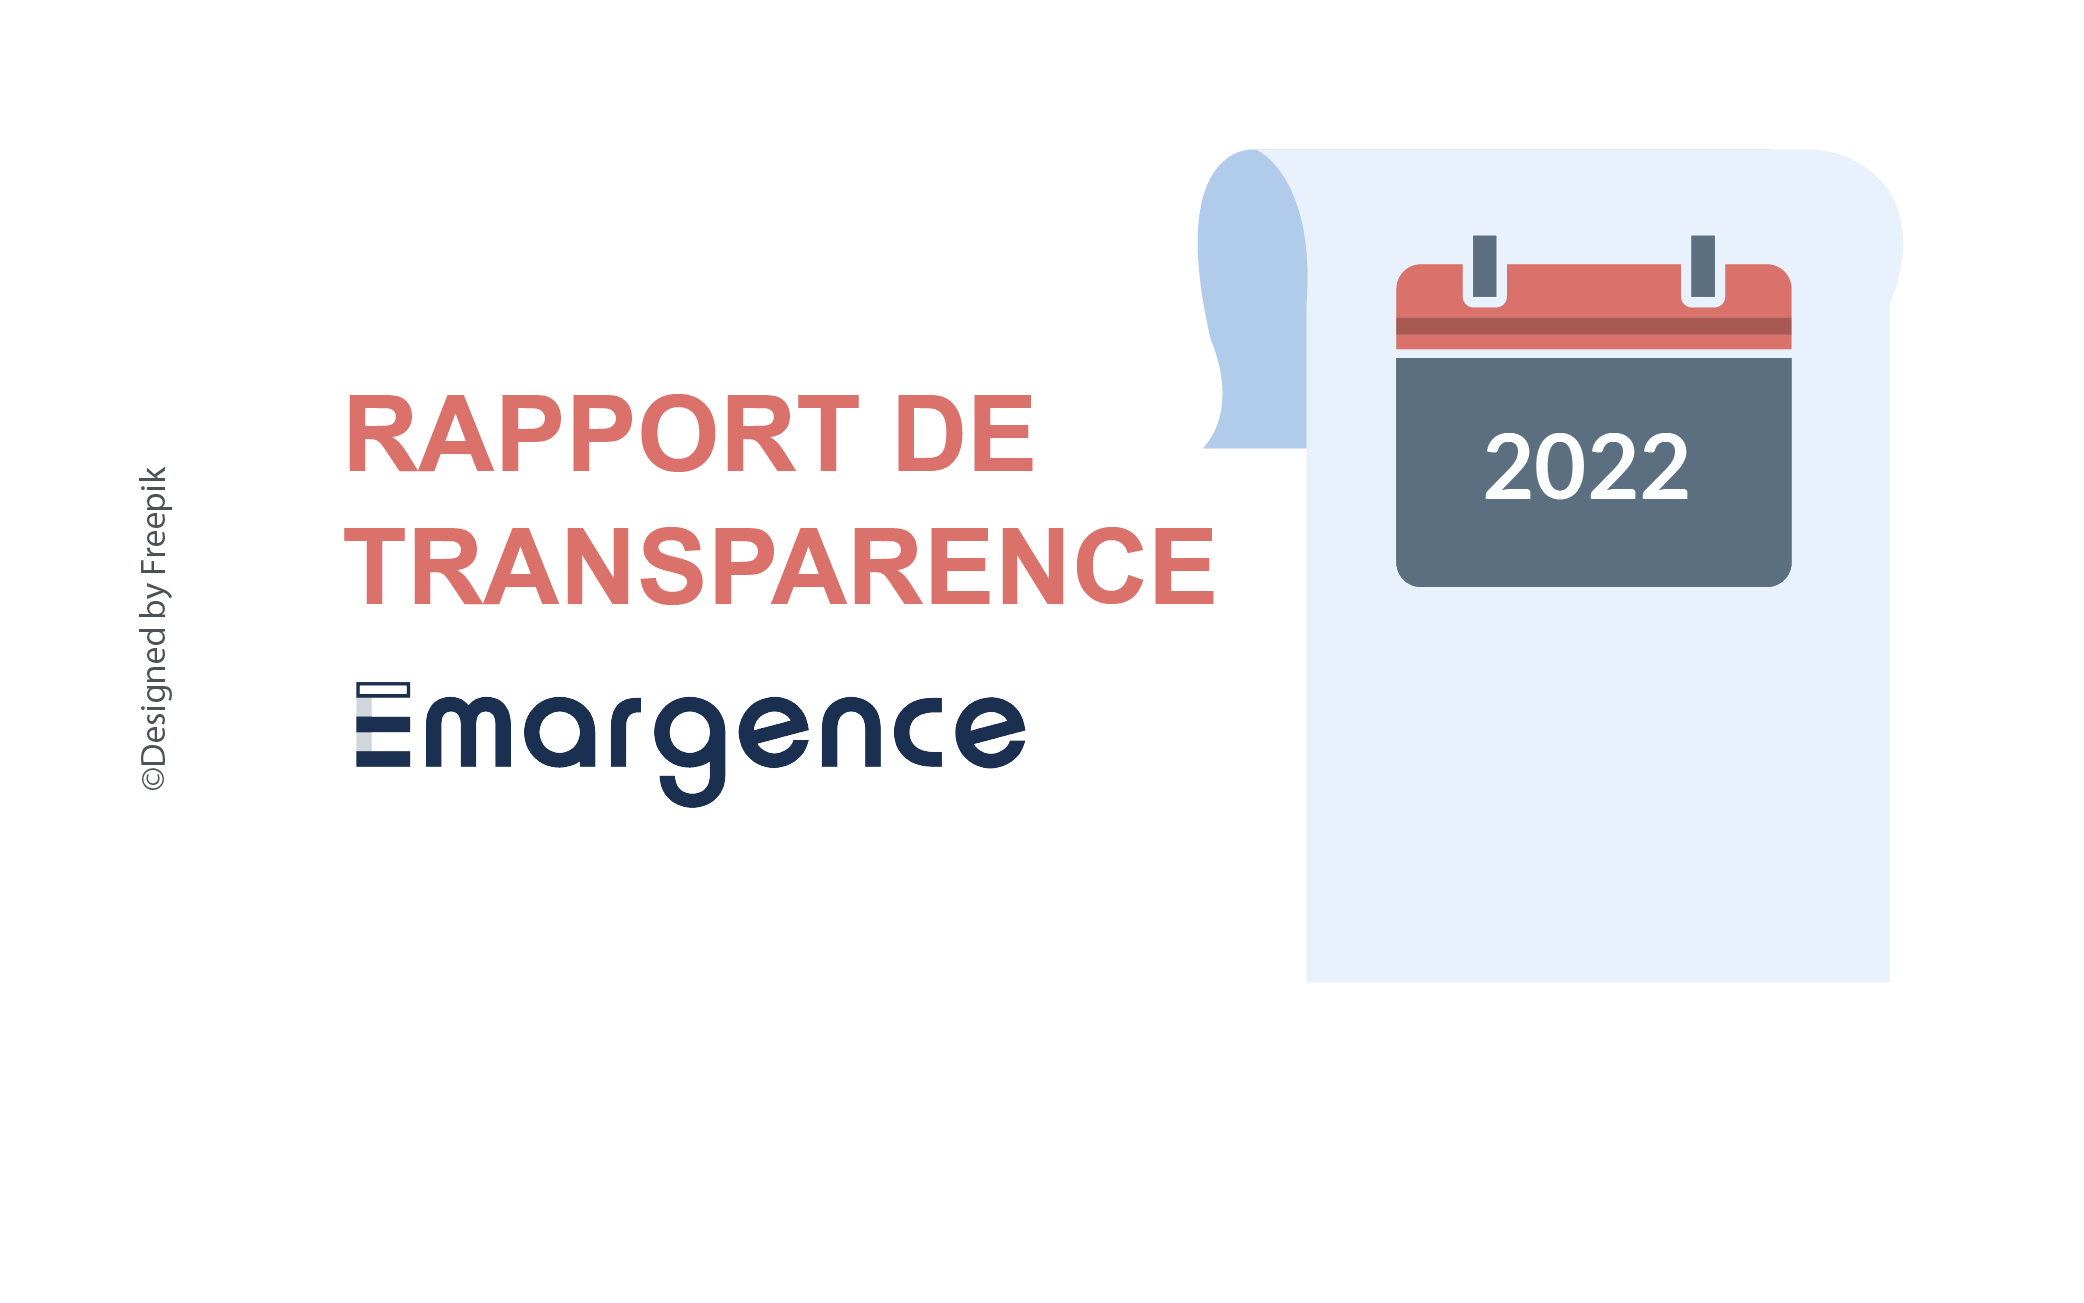 https://www.emargence.fr/wp-content/uploads/2022/01/ACTU-EMARGENCE_RapportTransparence-2022.png